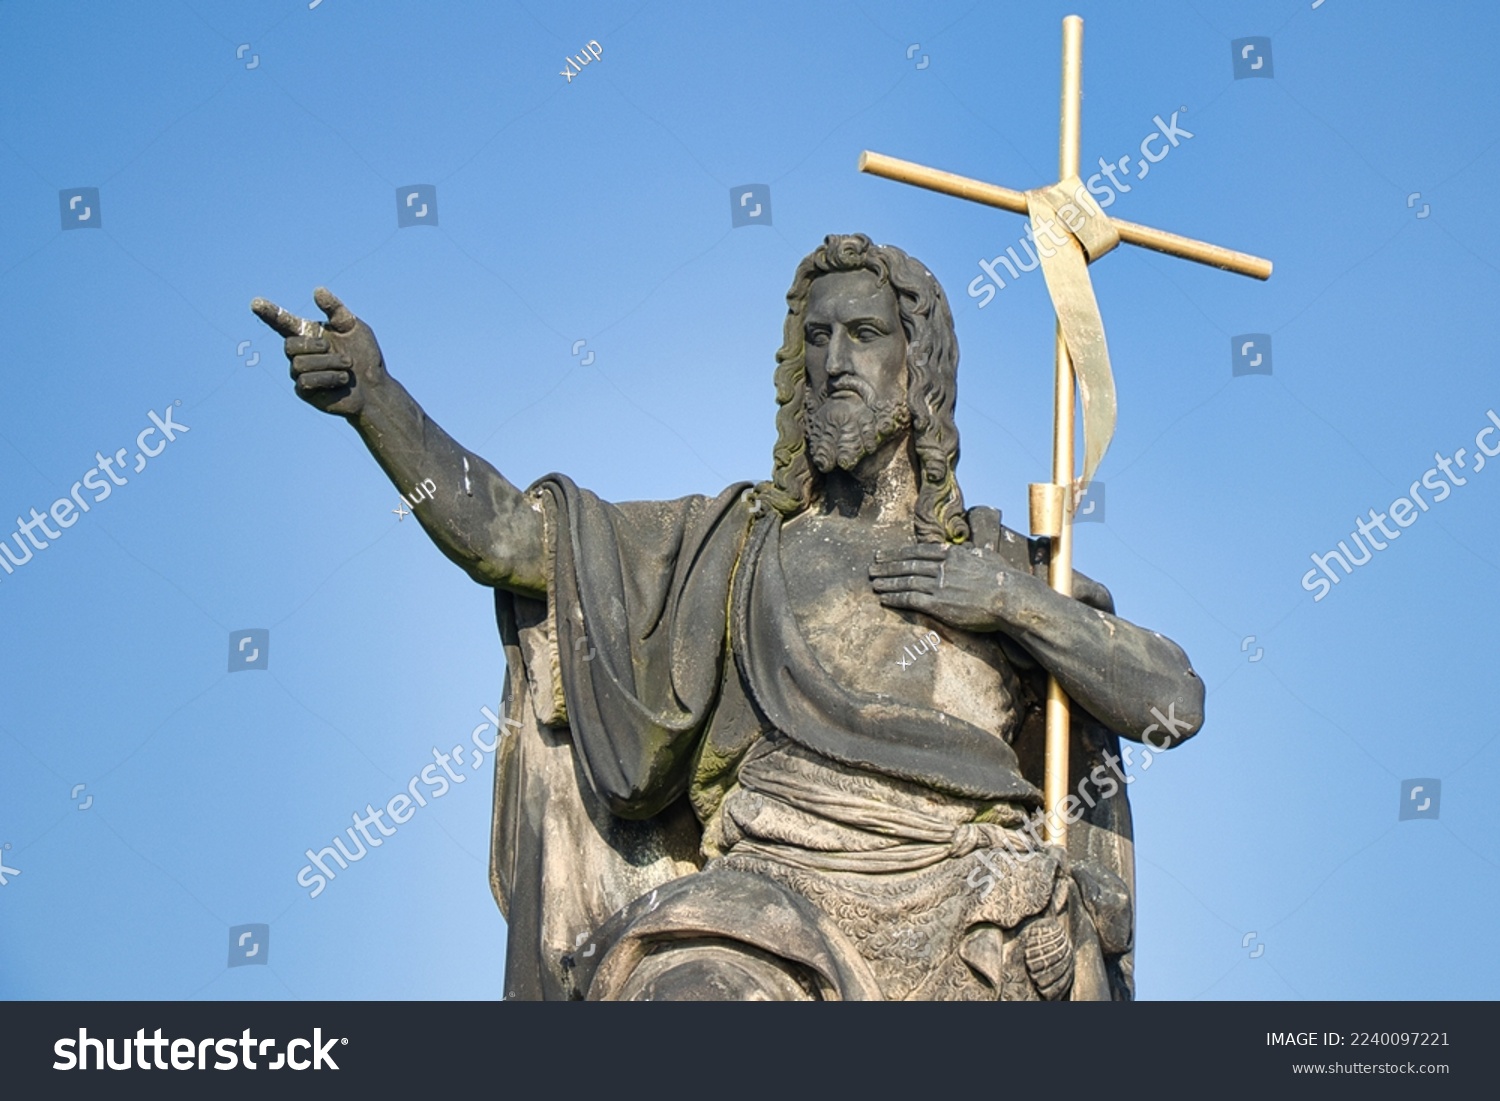 Statue of St. John the Baptist on Charles bridge, Prague. Czech Republic. #2240097221